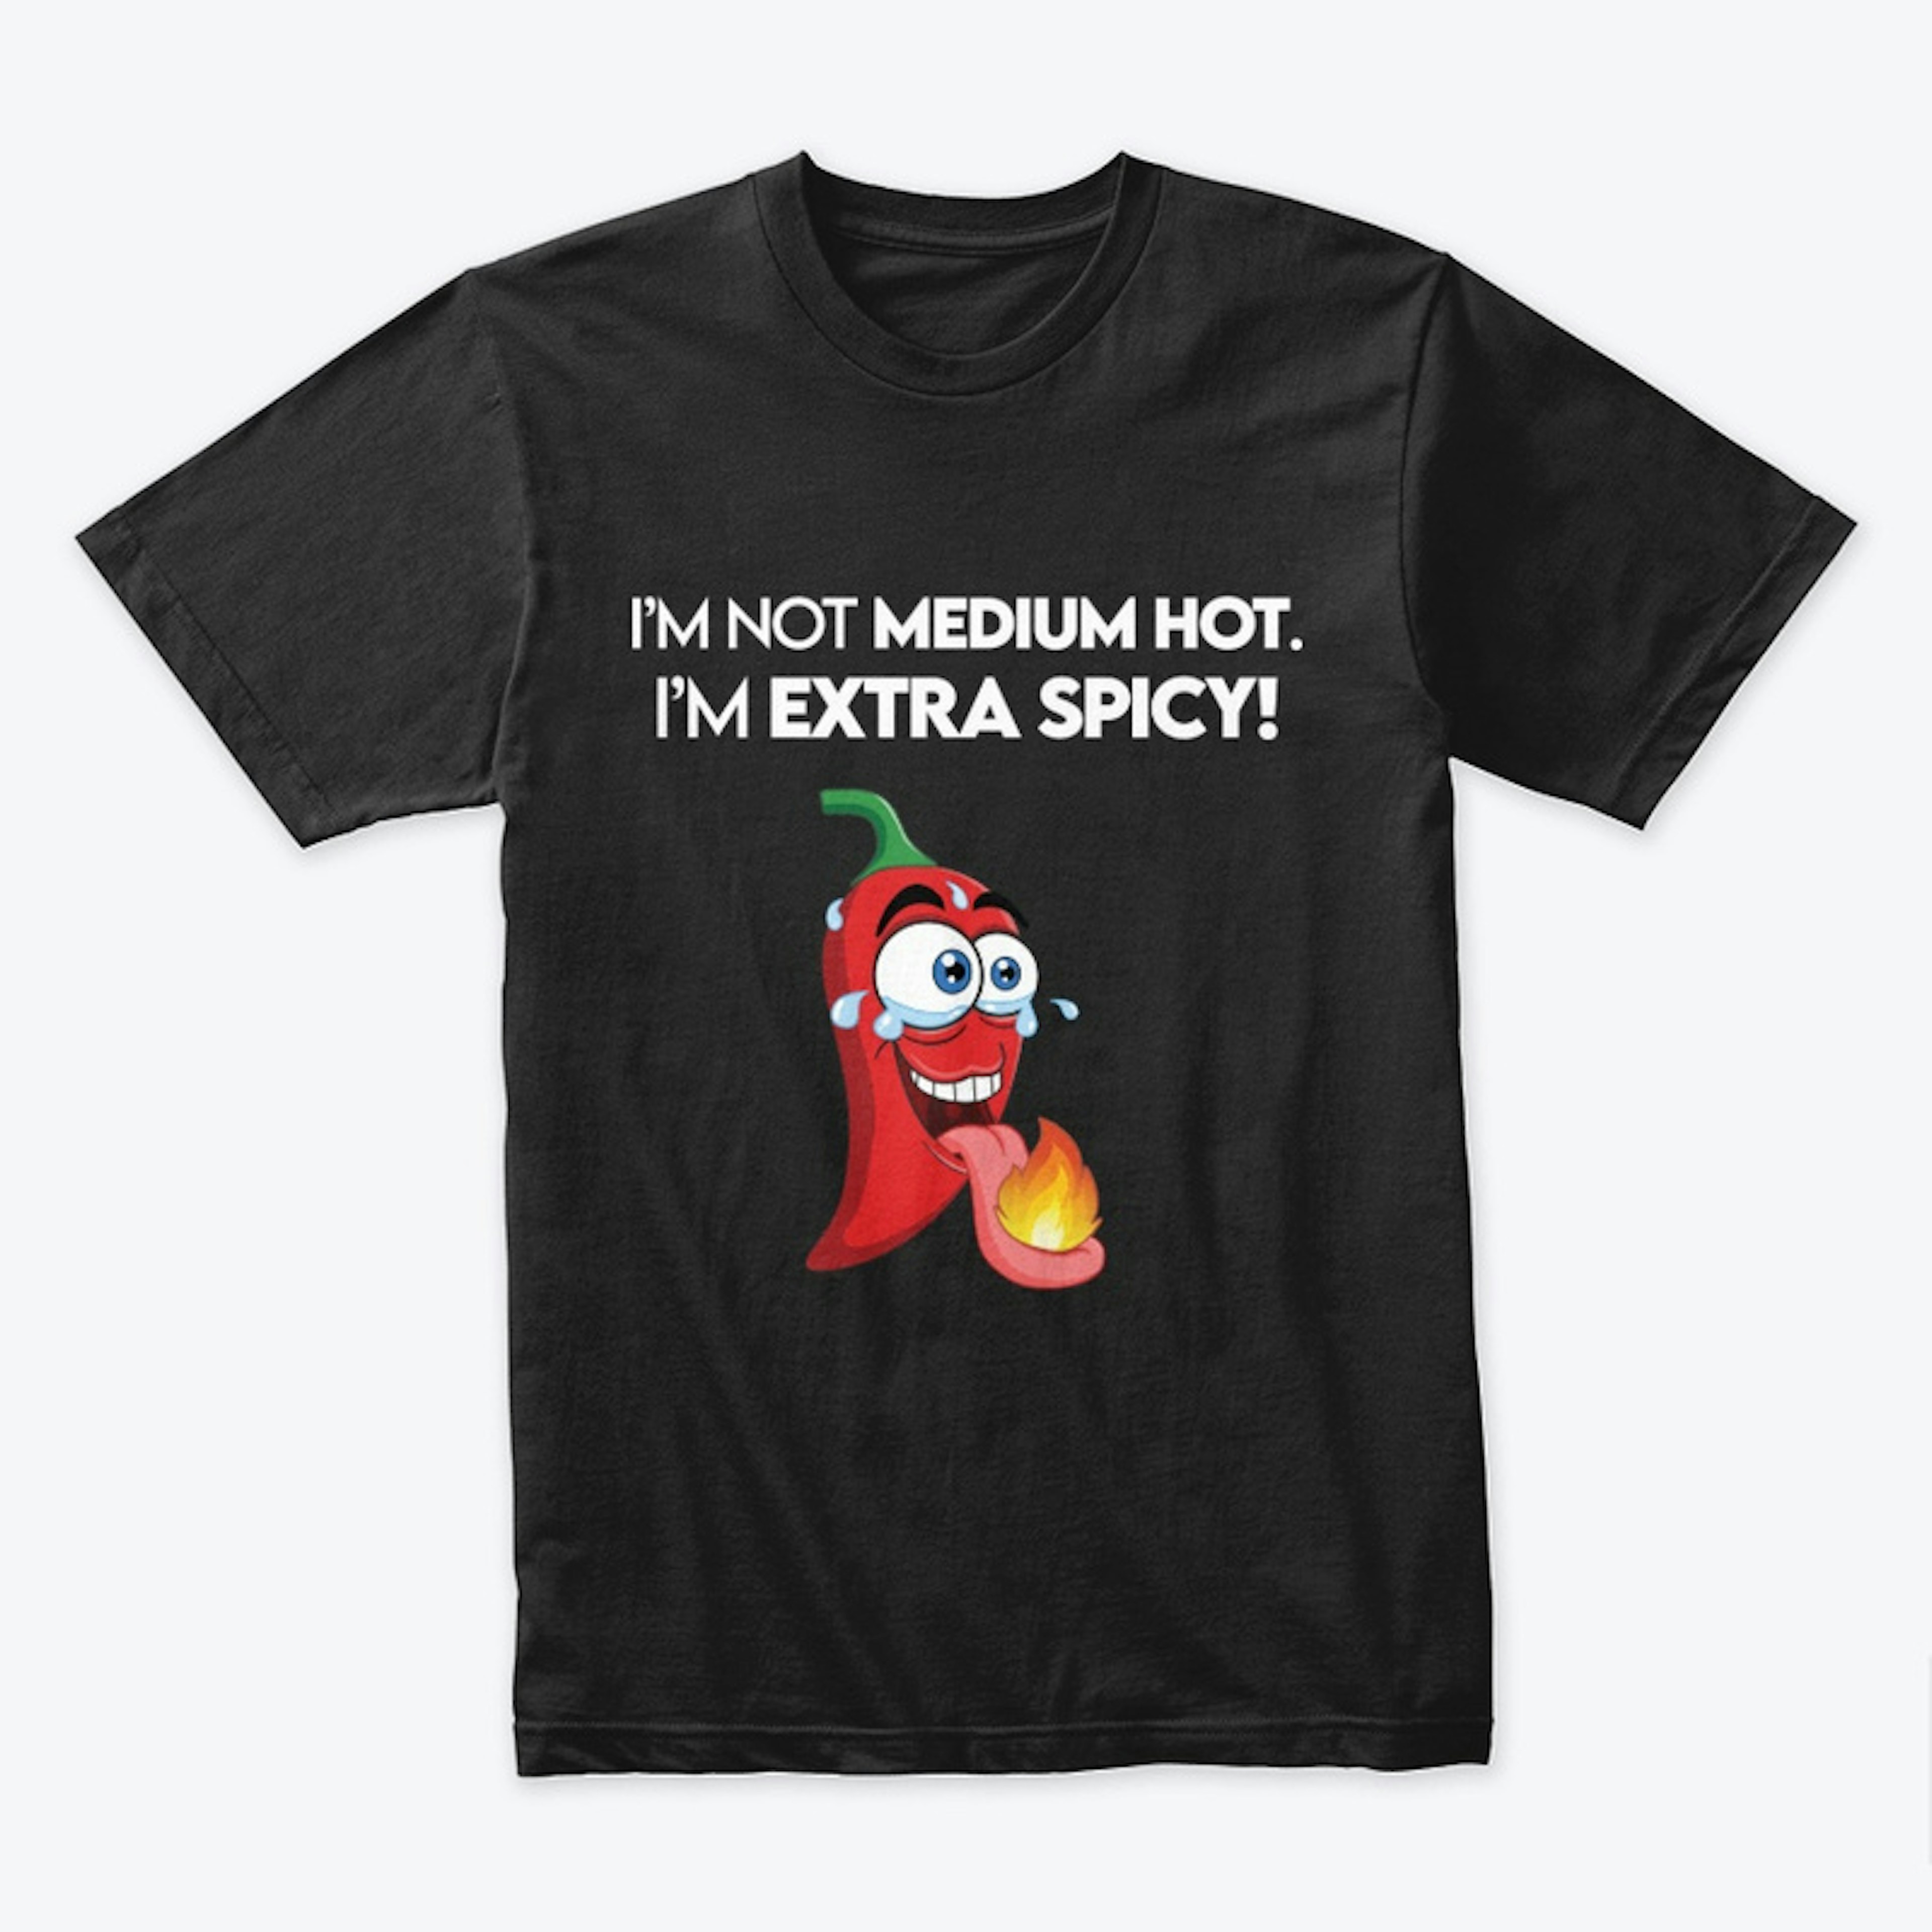 I'm not MEDIUM hot. I'm EXTRA SPICY!